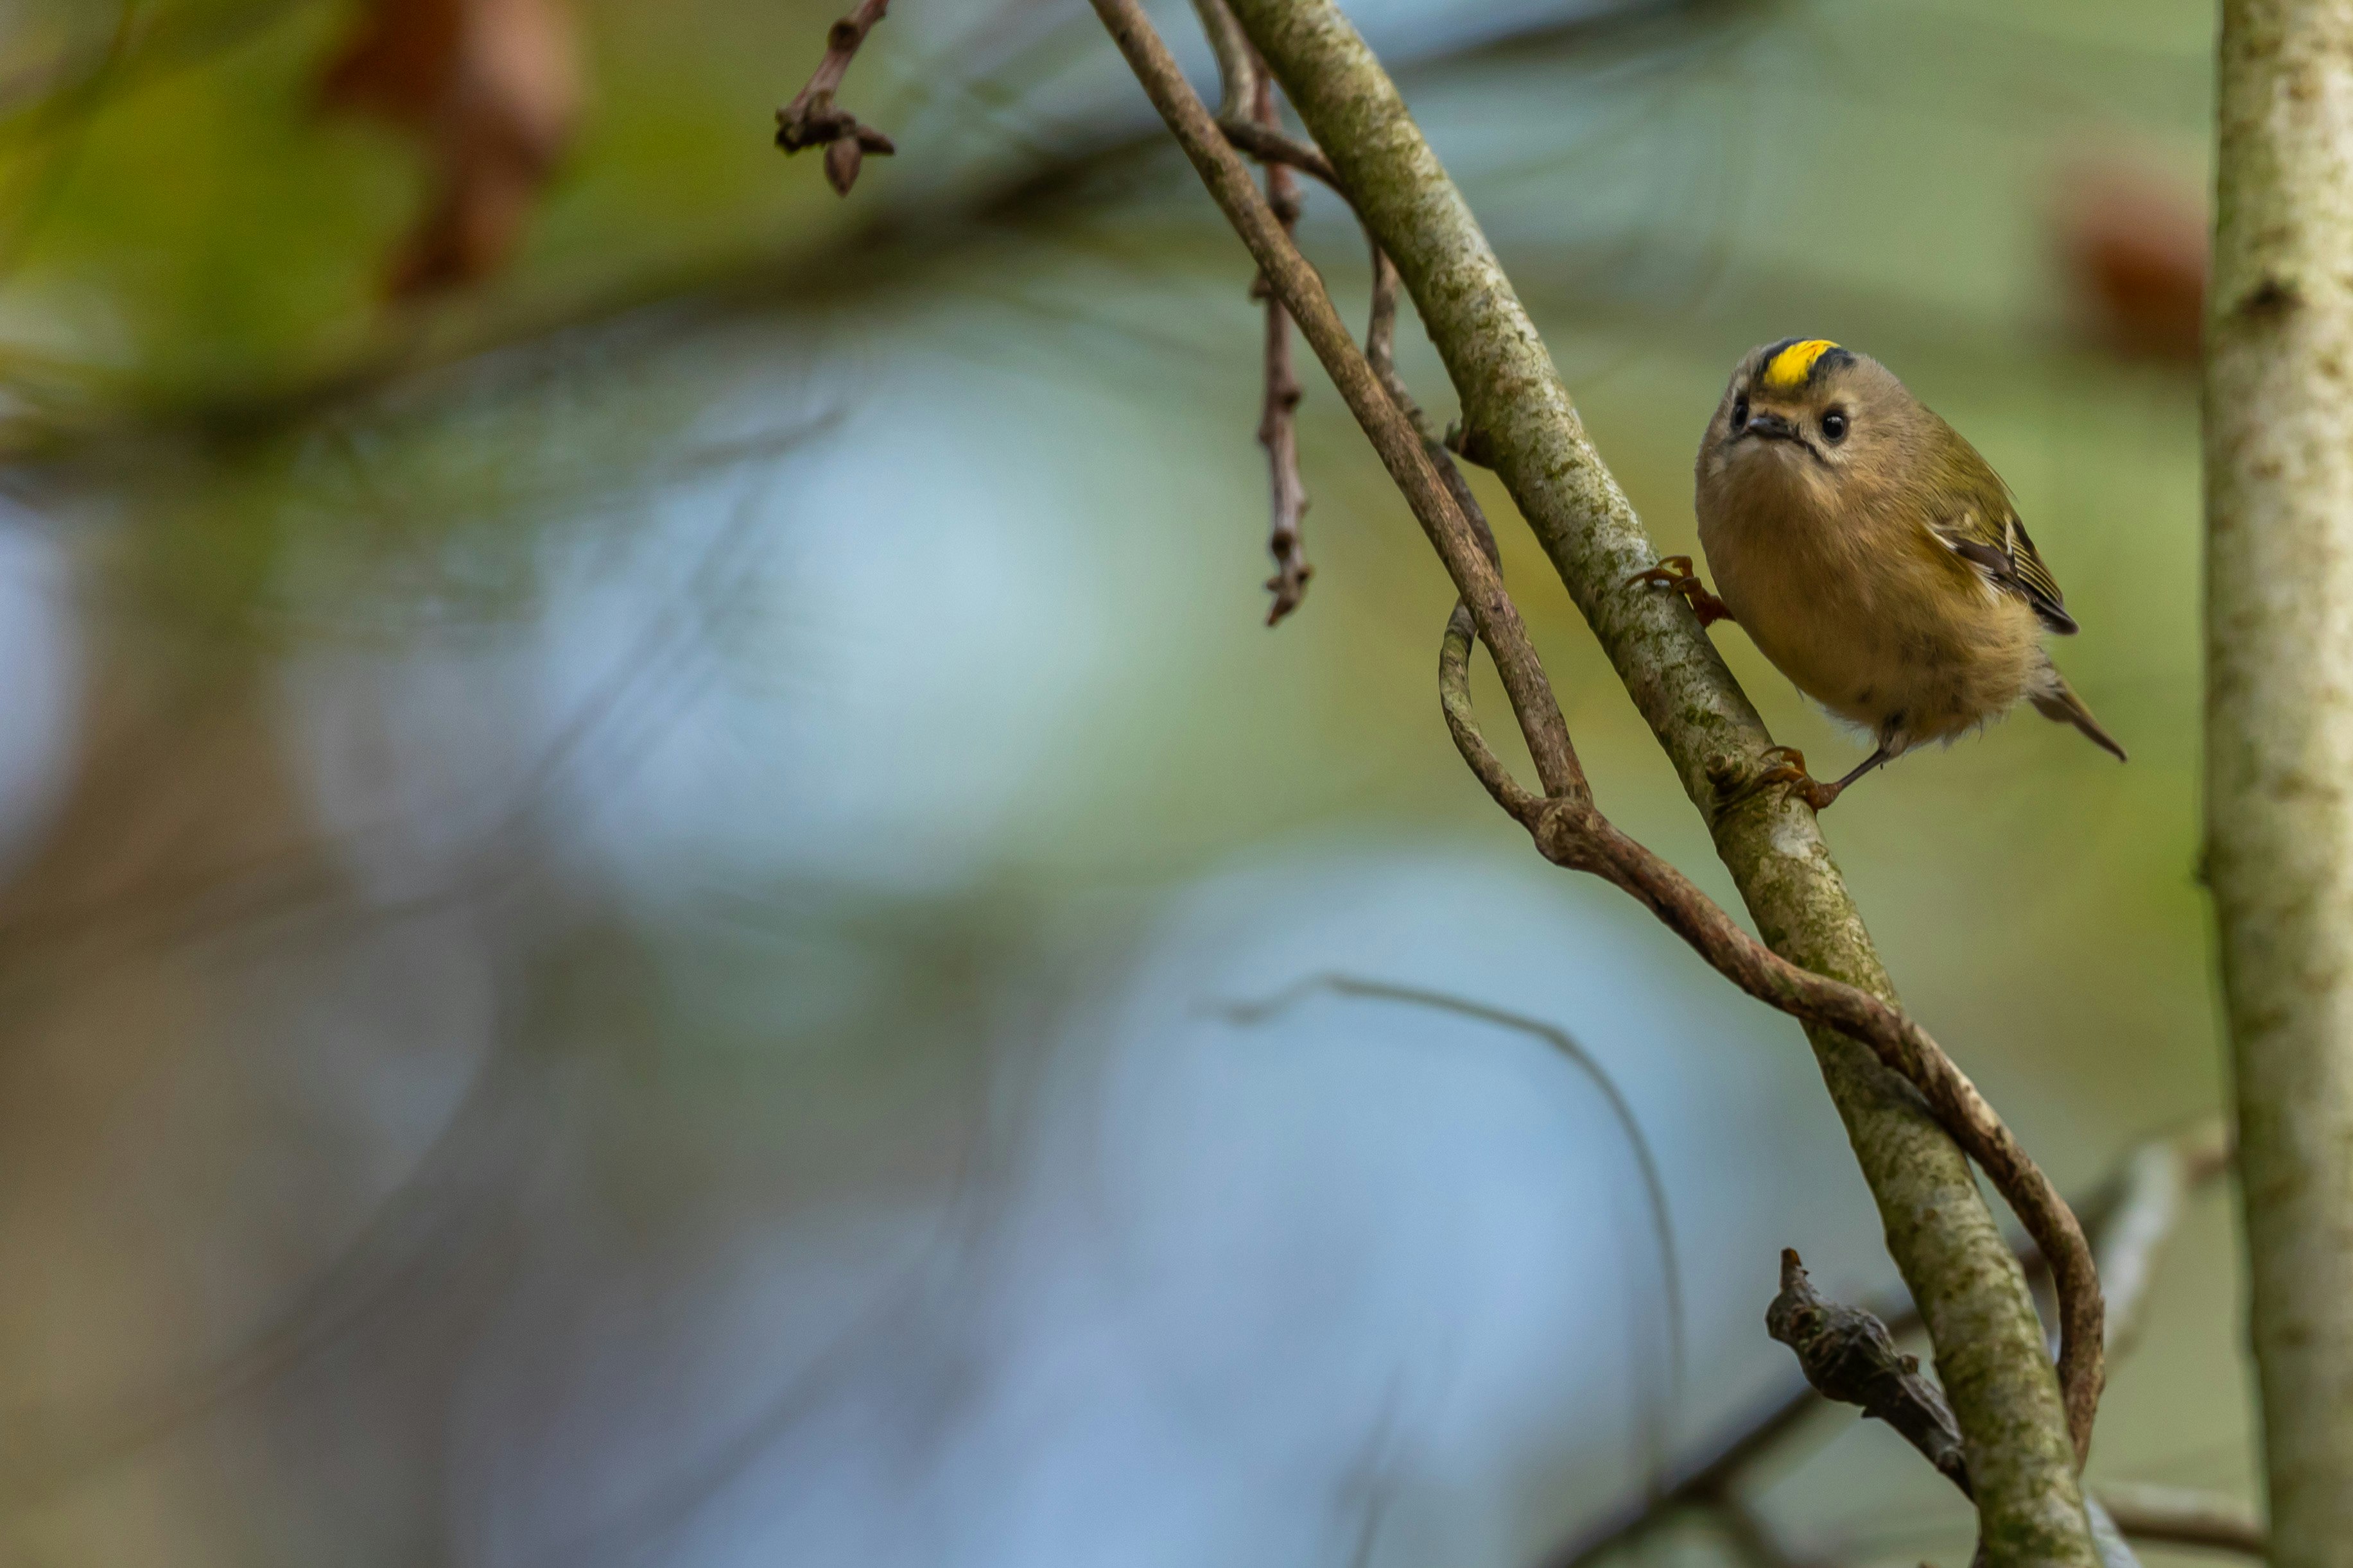 yellow bird on brown tree branch during daytime